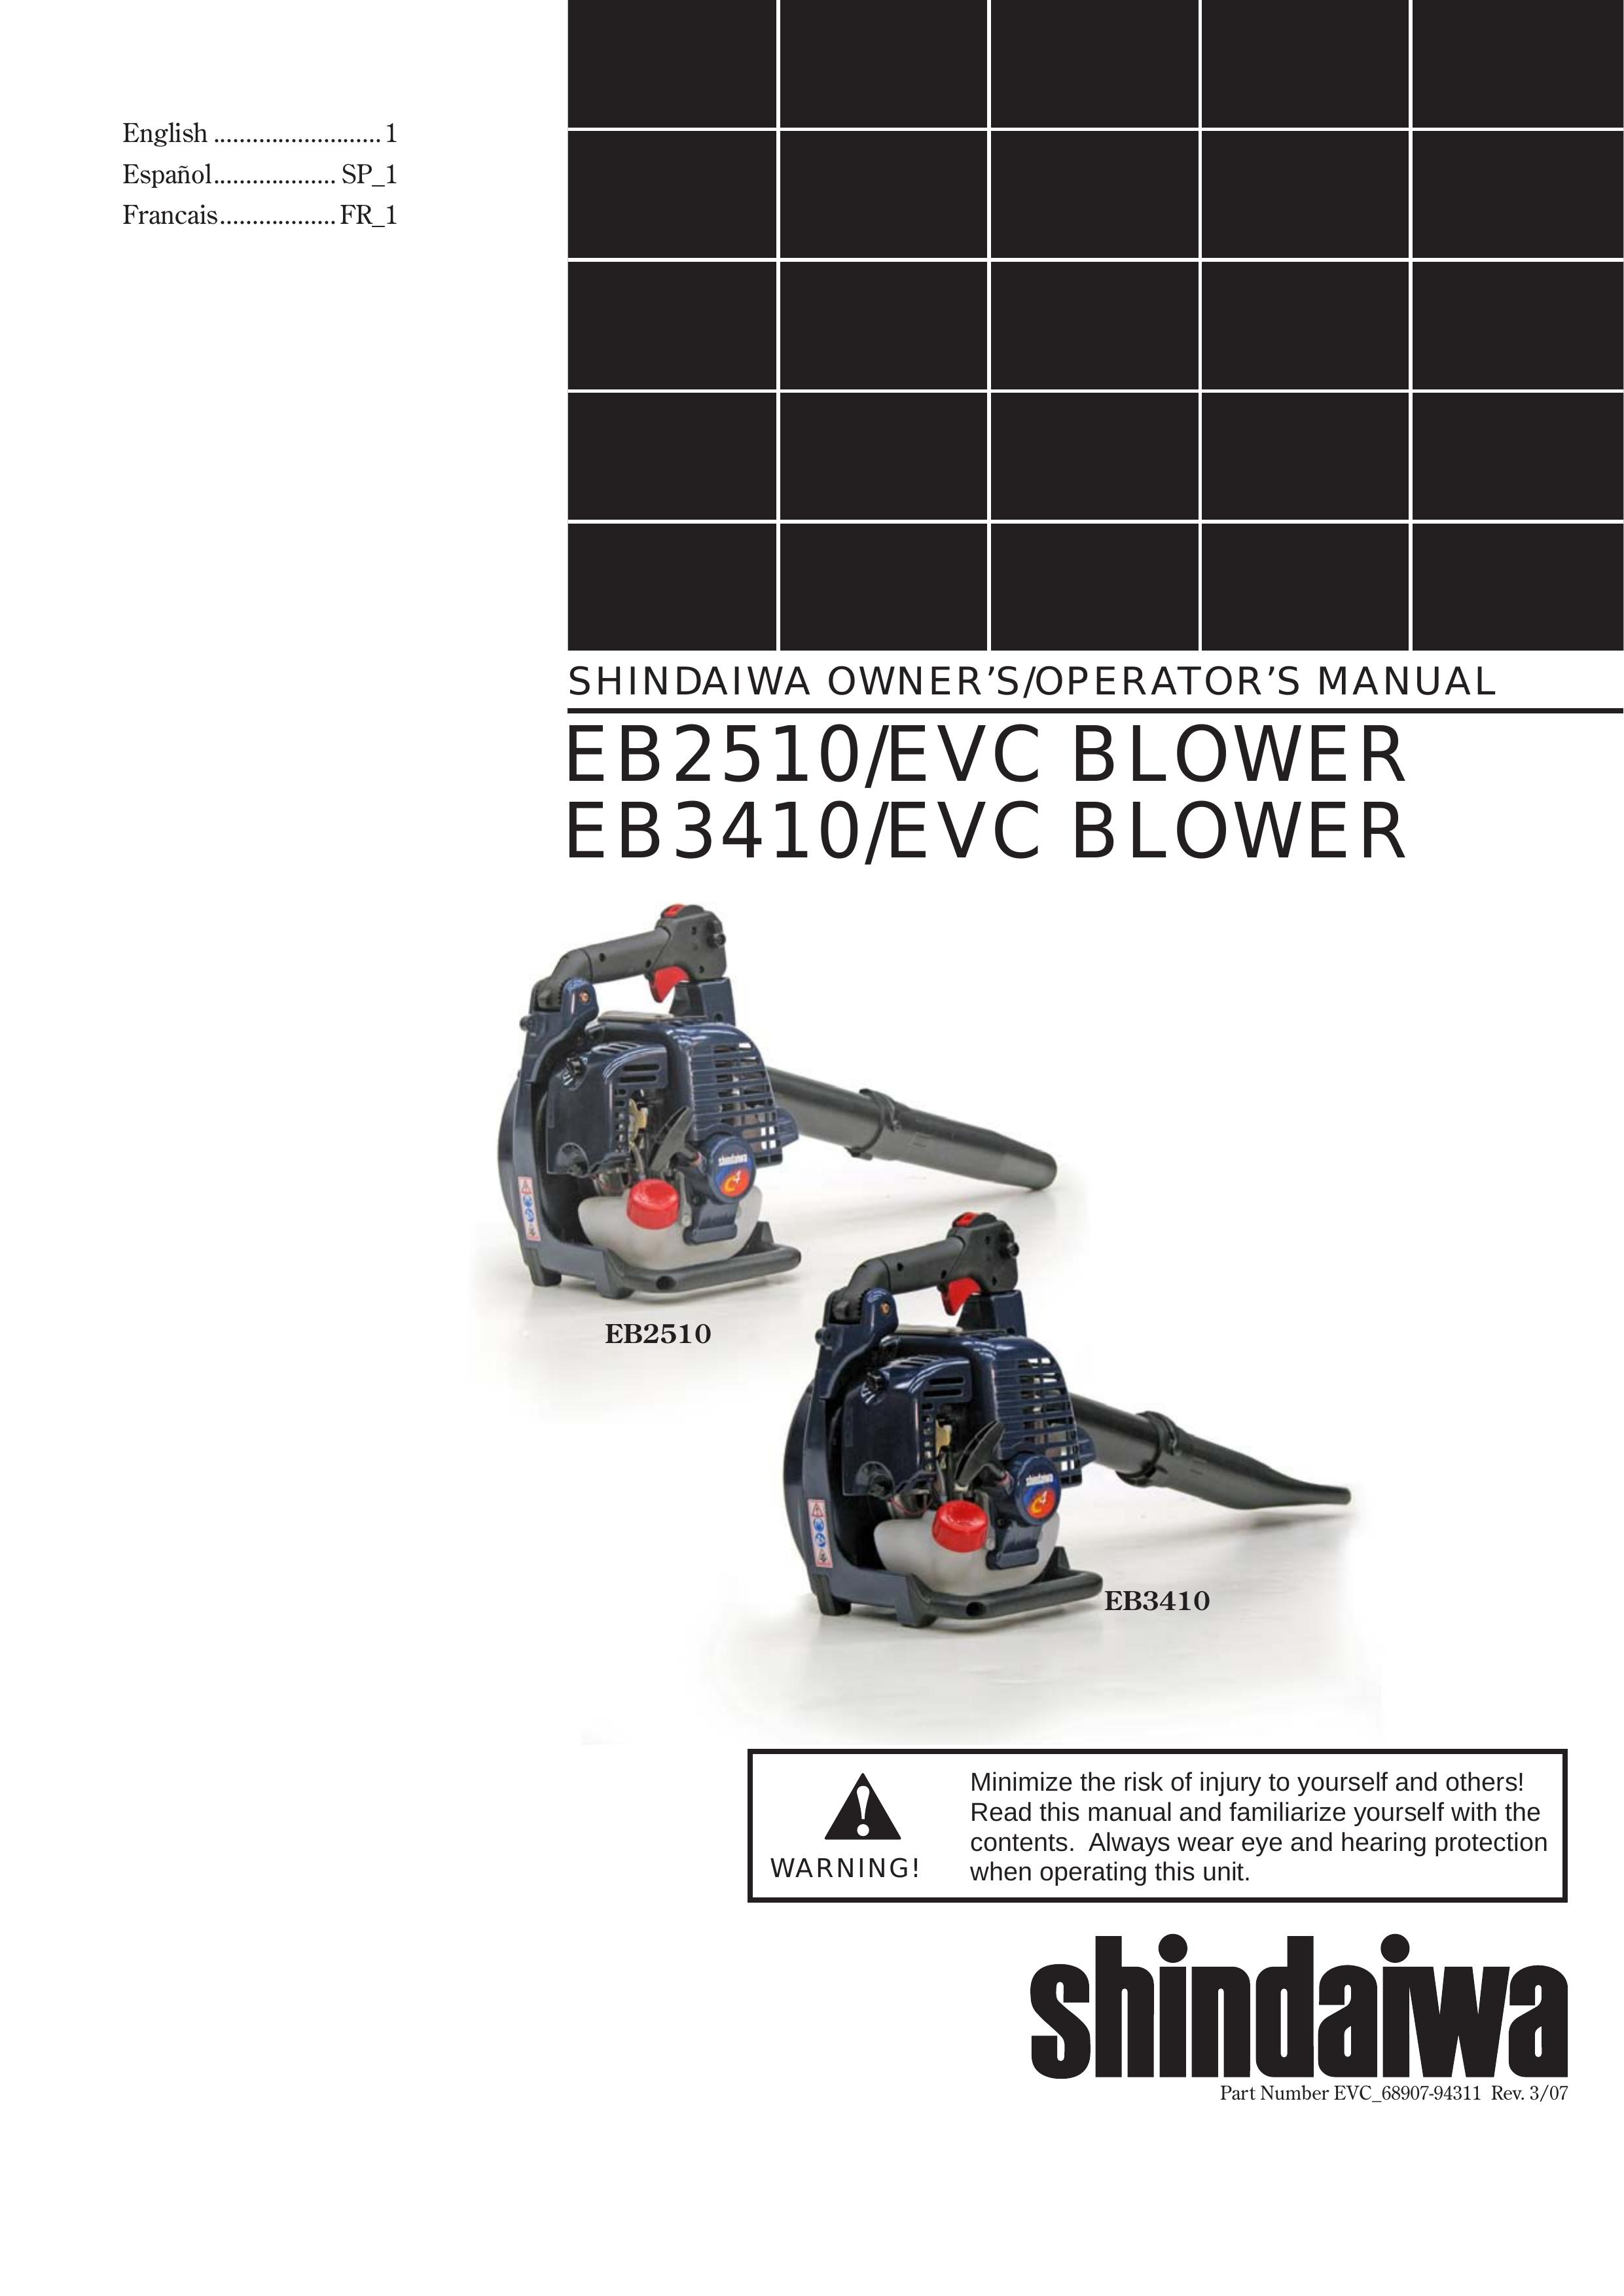 Shindaiwa EB2510 Blower User Manual